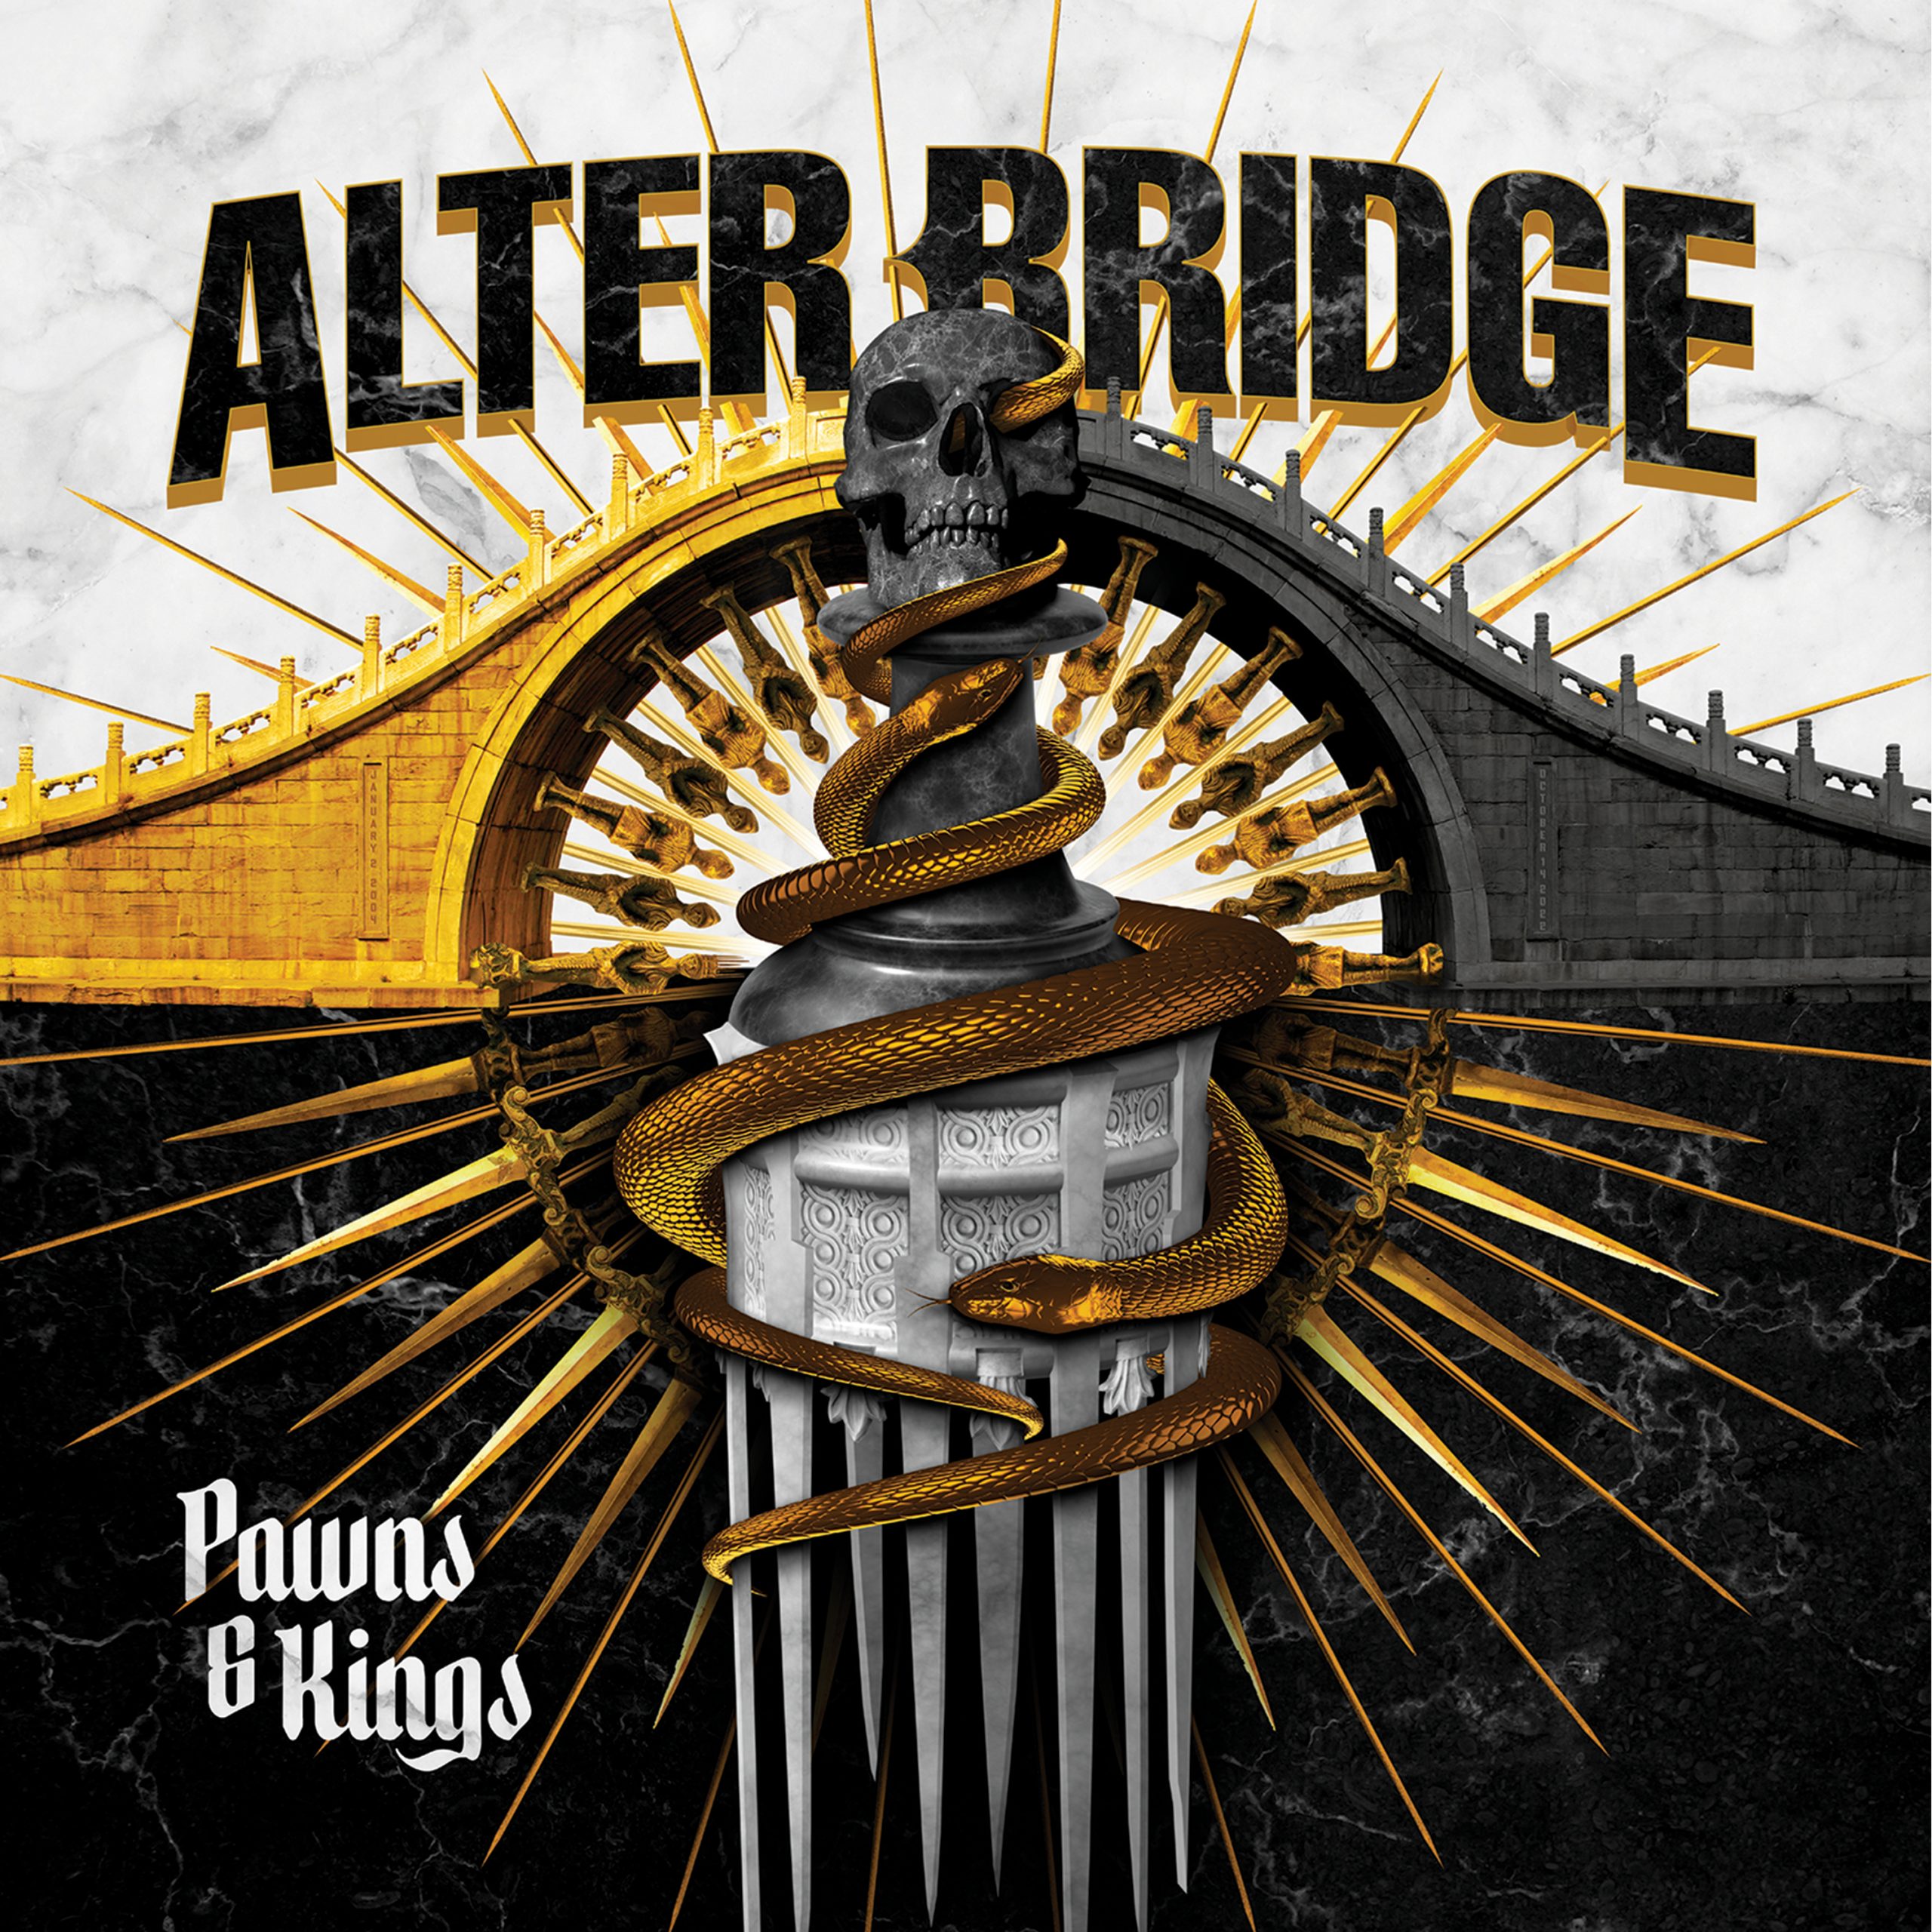 Alter Bridge Debut New Single 'Silver Tongue'